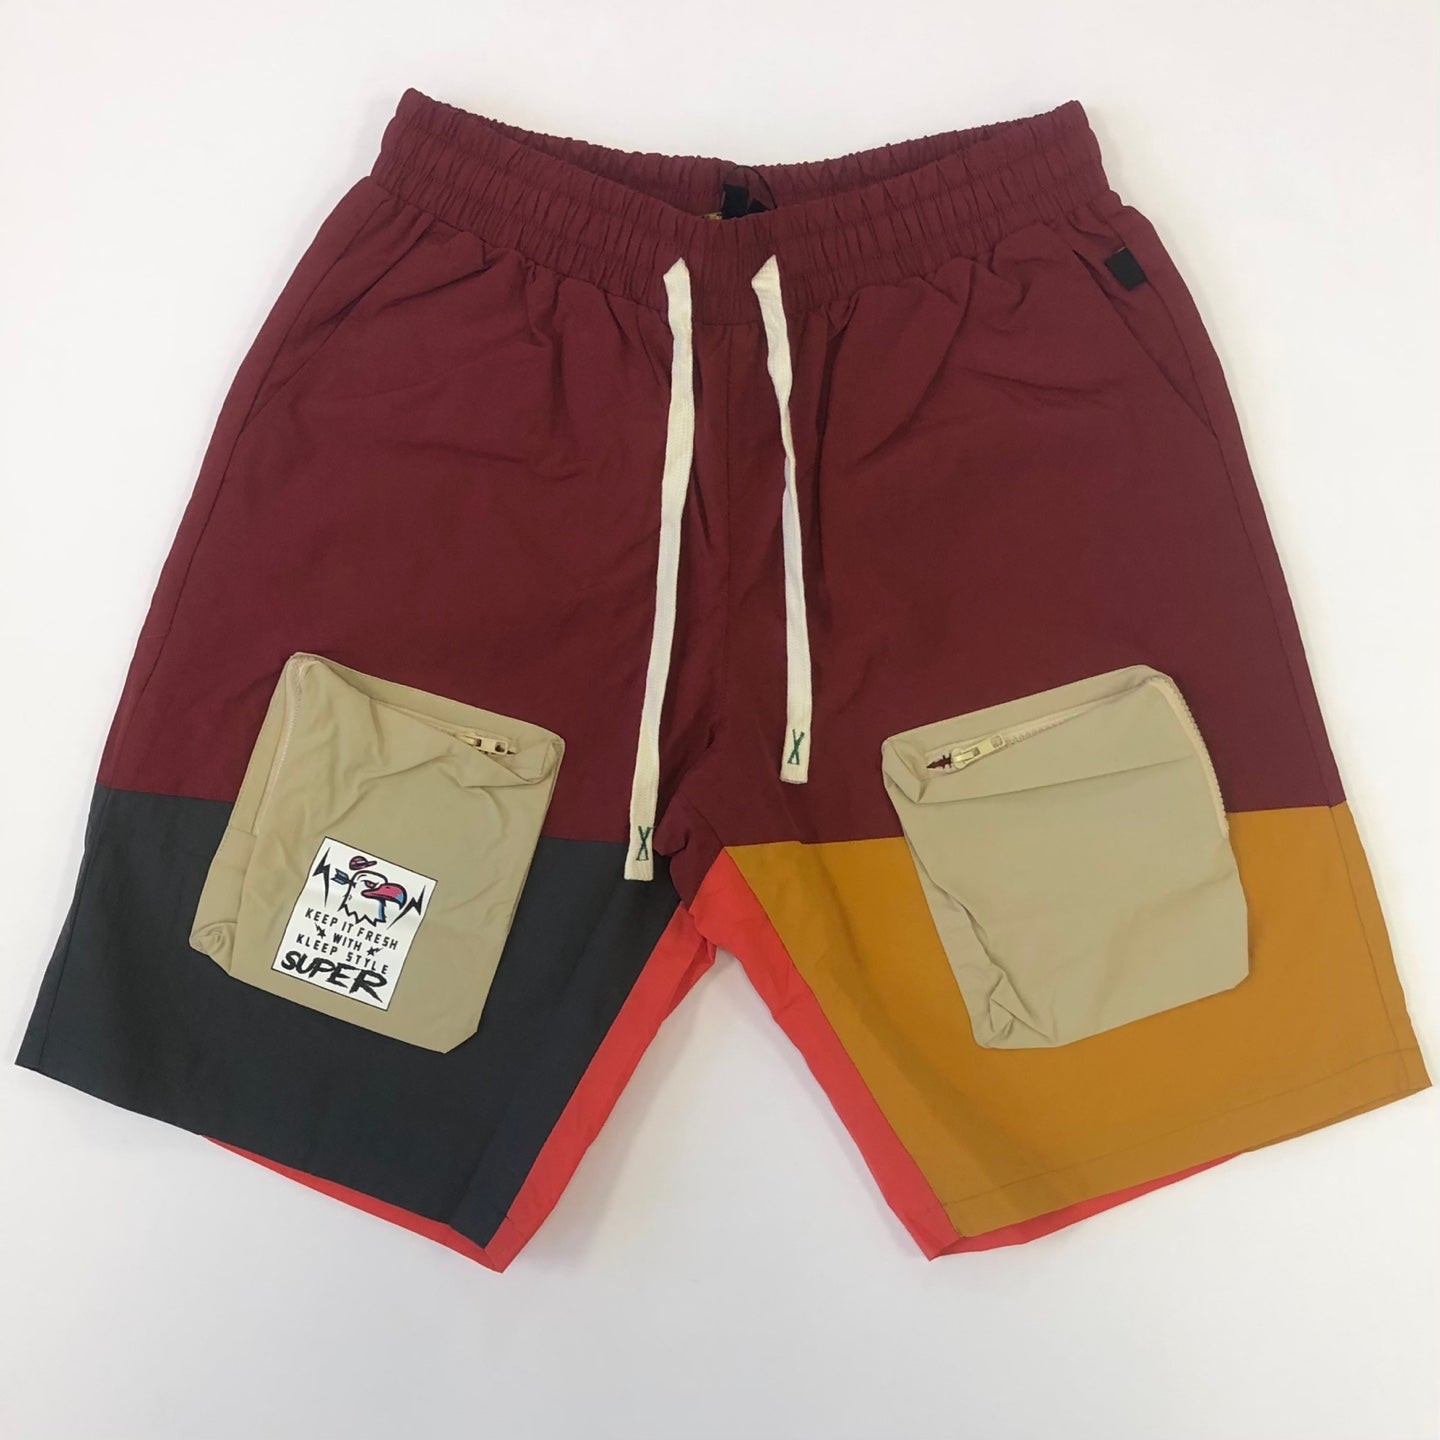 KLEEP Conte Men's Colorful Nylon Short Pants